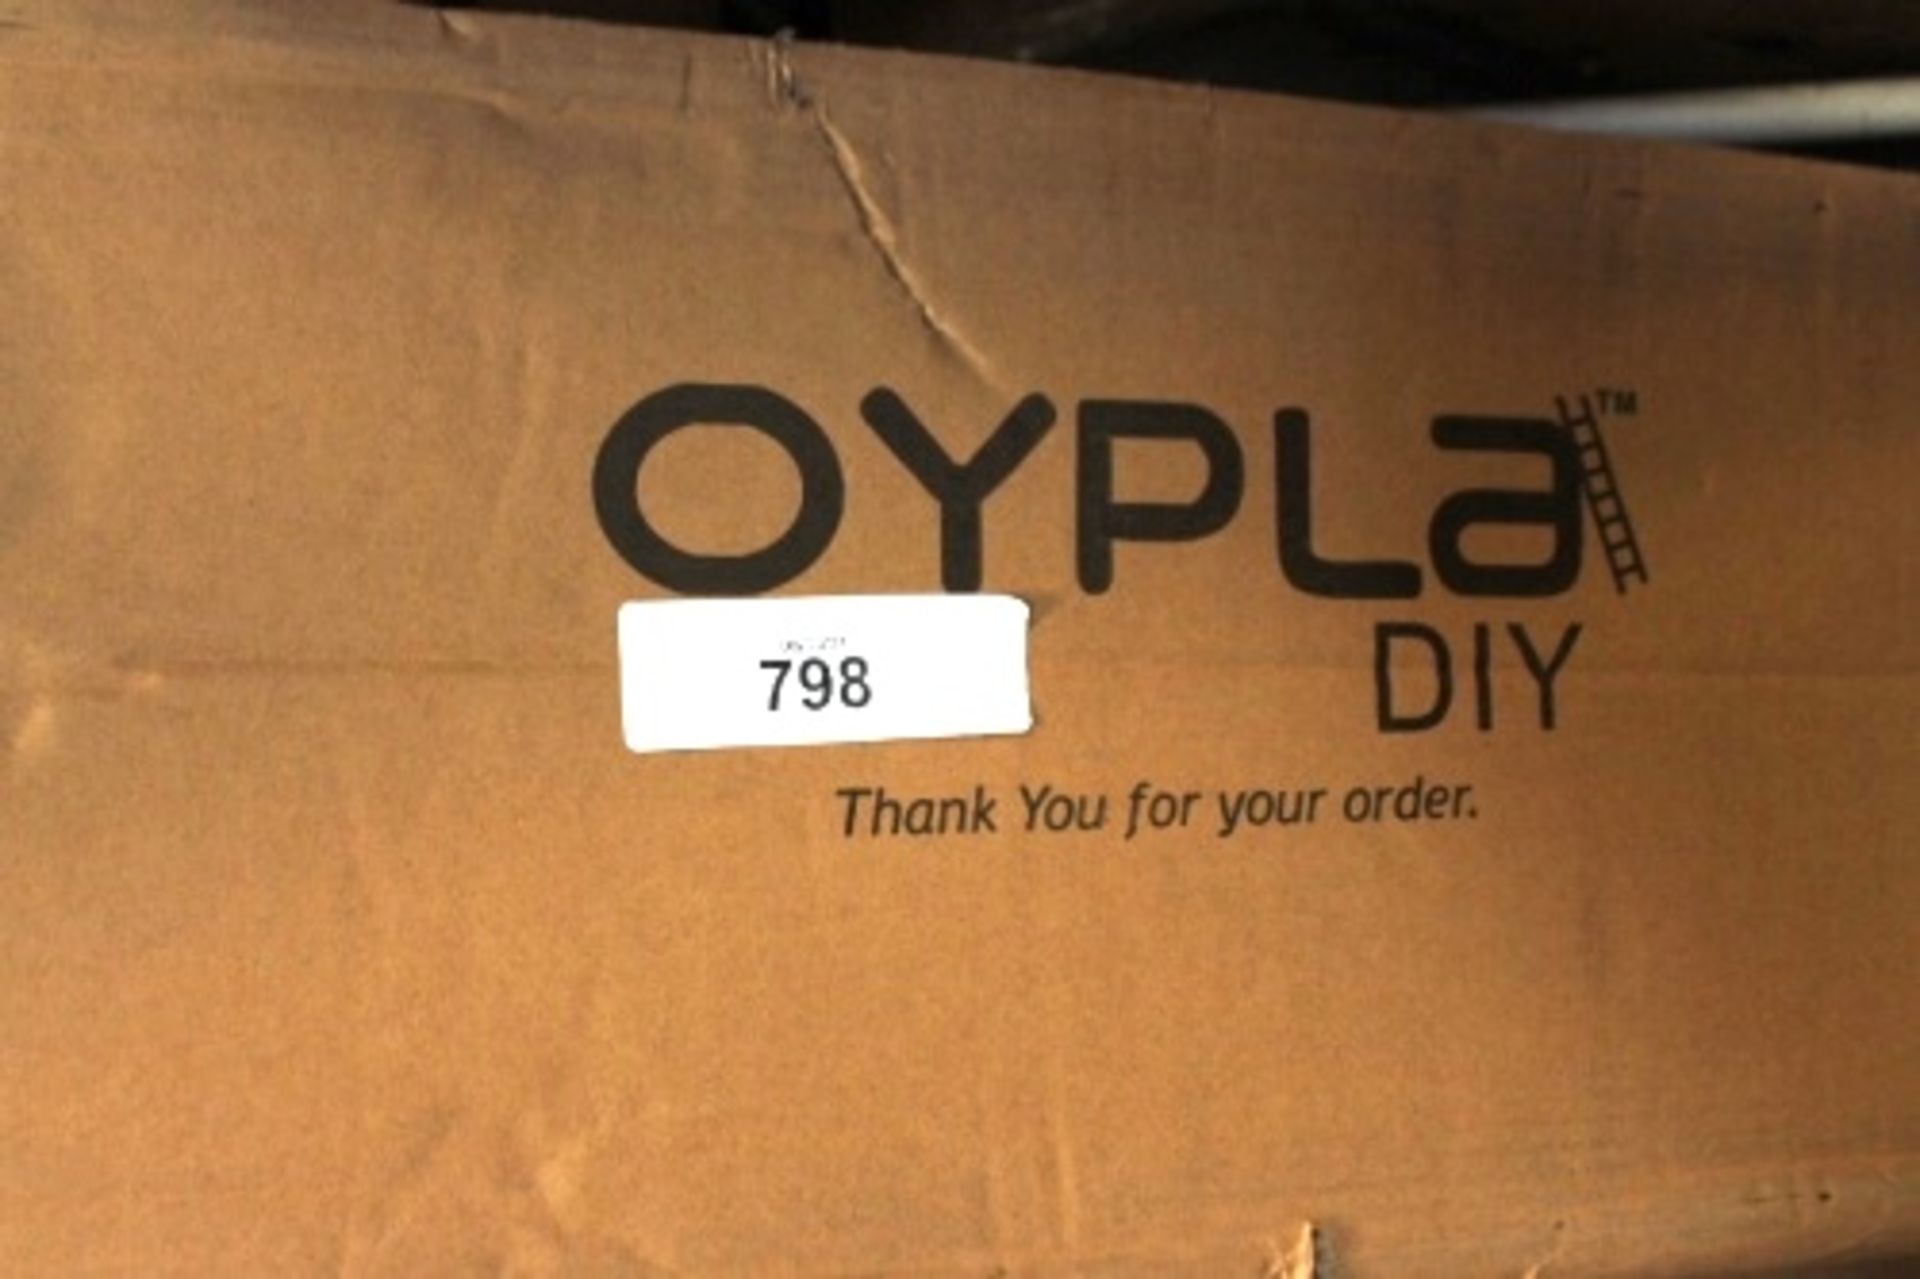 2 x Oypla folding aluminium loading ramps, model 3048 - New in box (GS11)